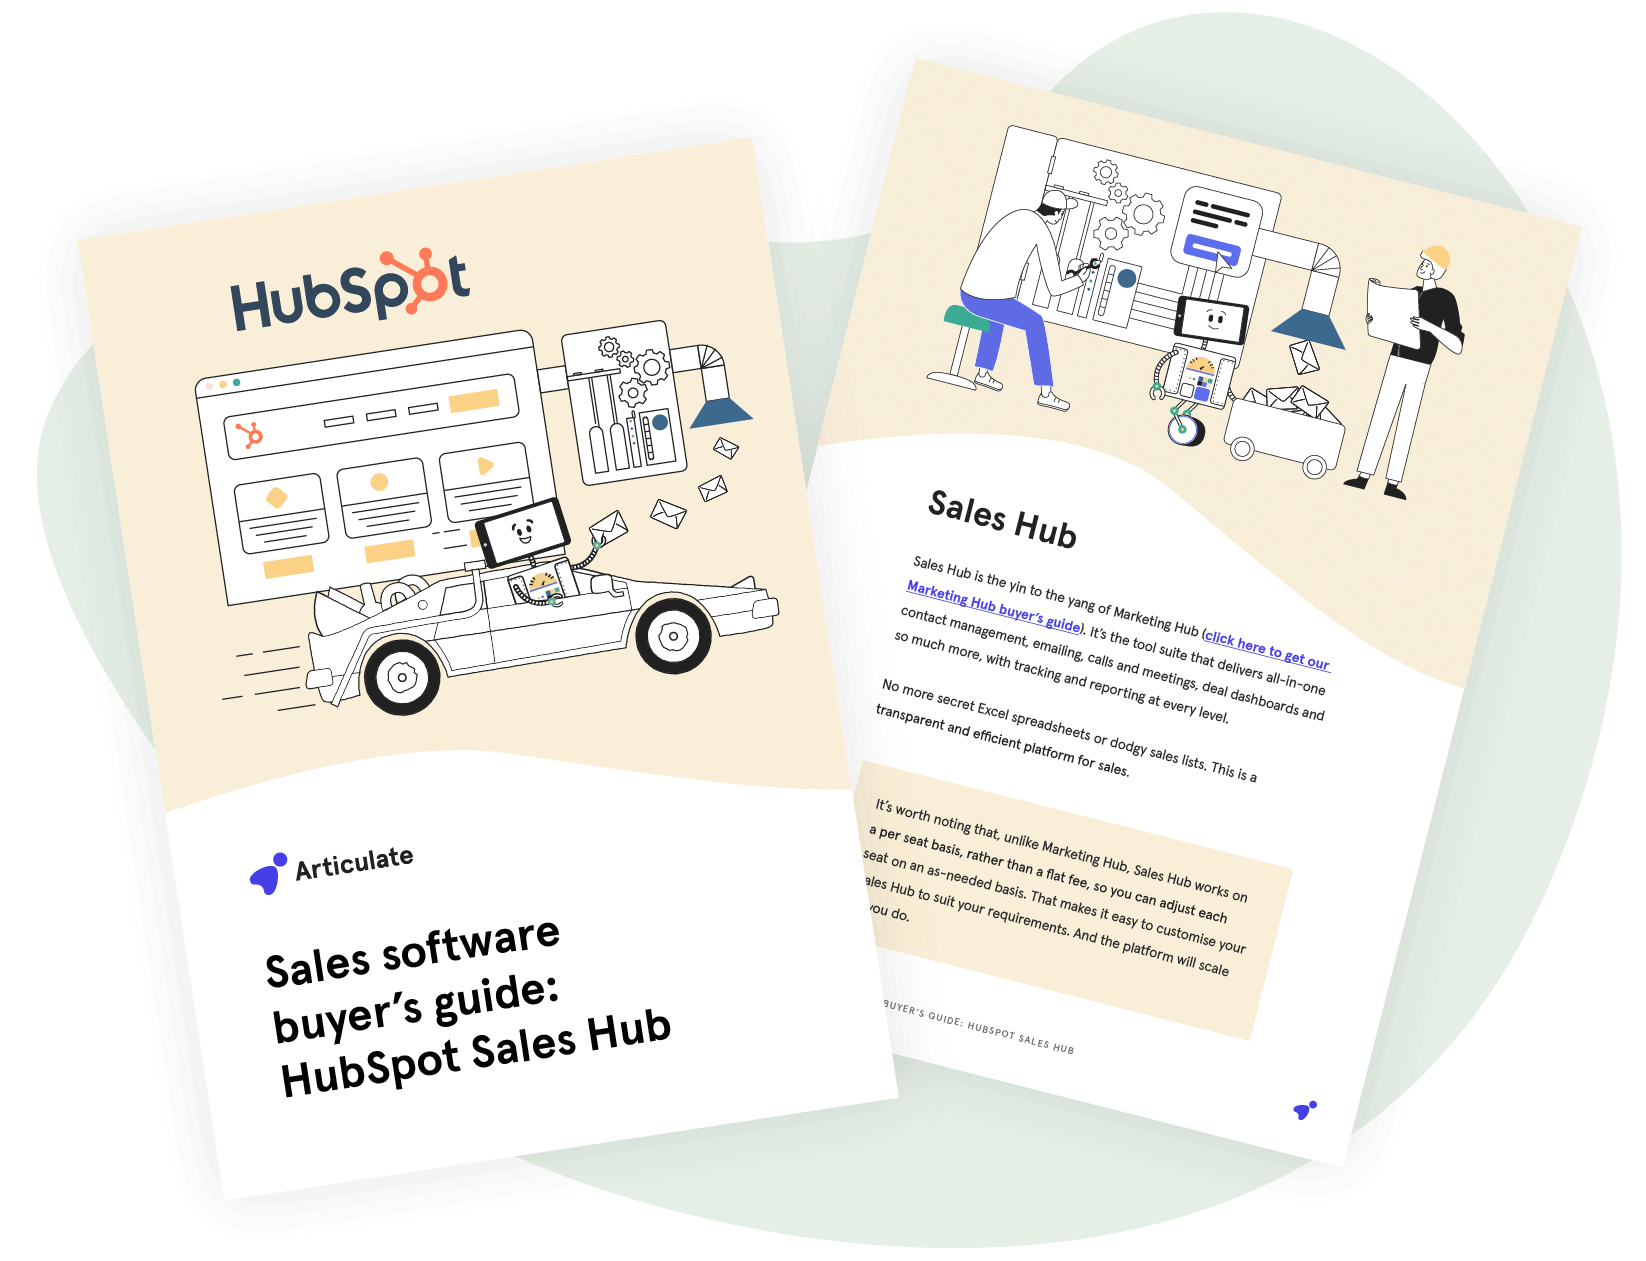 Sales software buyer's guide: HubSpot Sales Hub